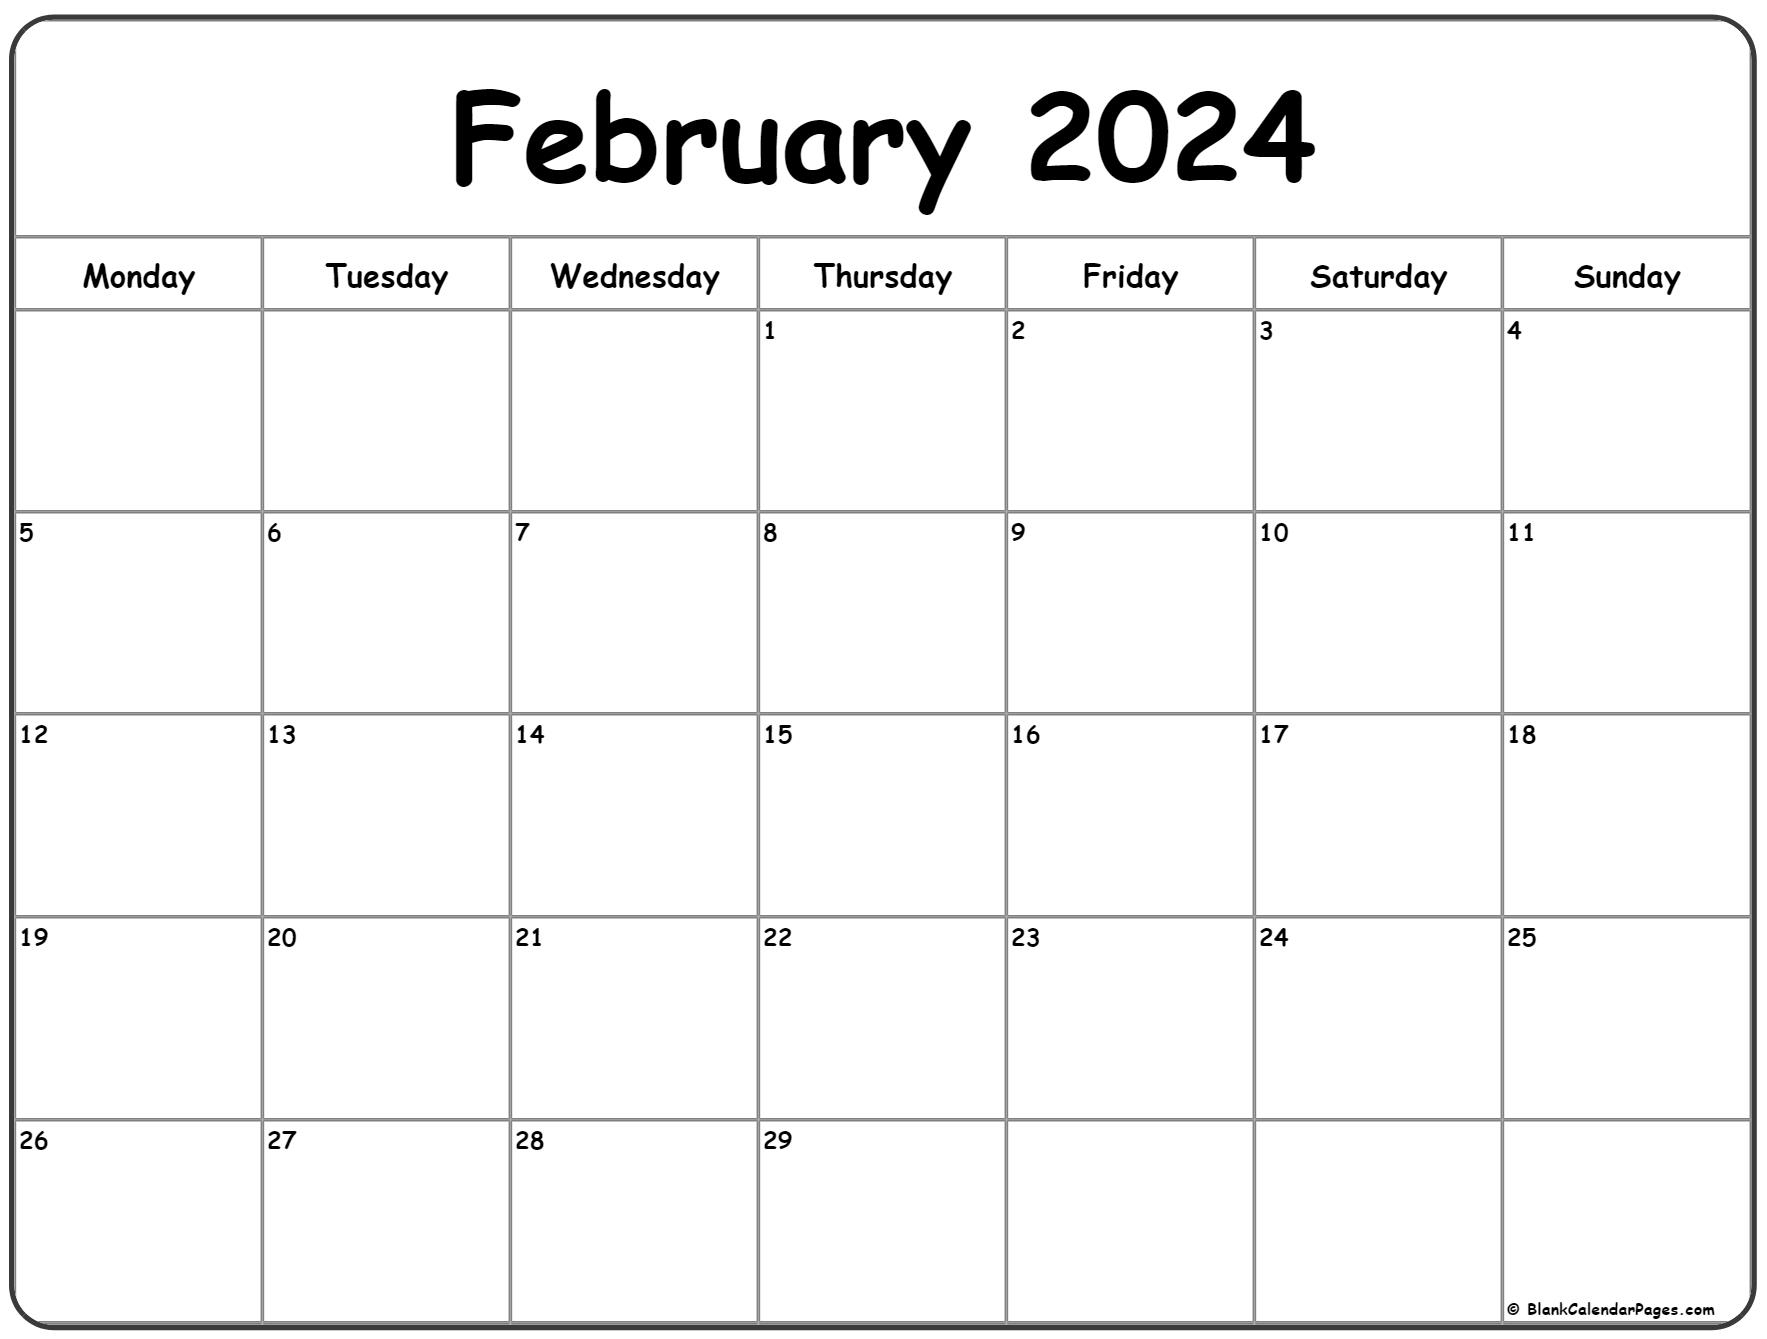 February 2024 Monday Calendar | Monday To Sunday for Feb 2024 Calendar Printable Free